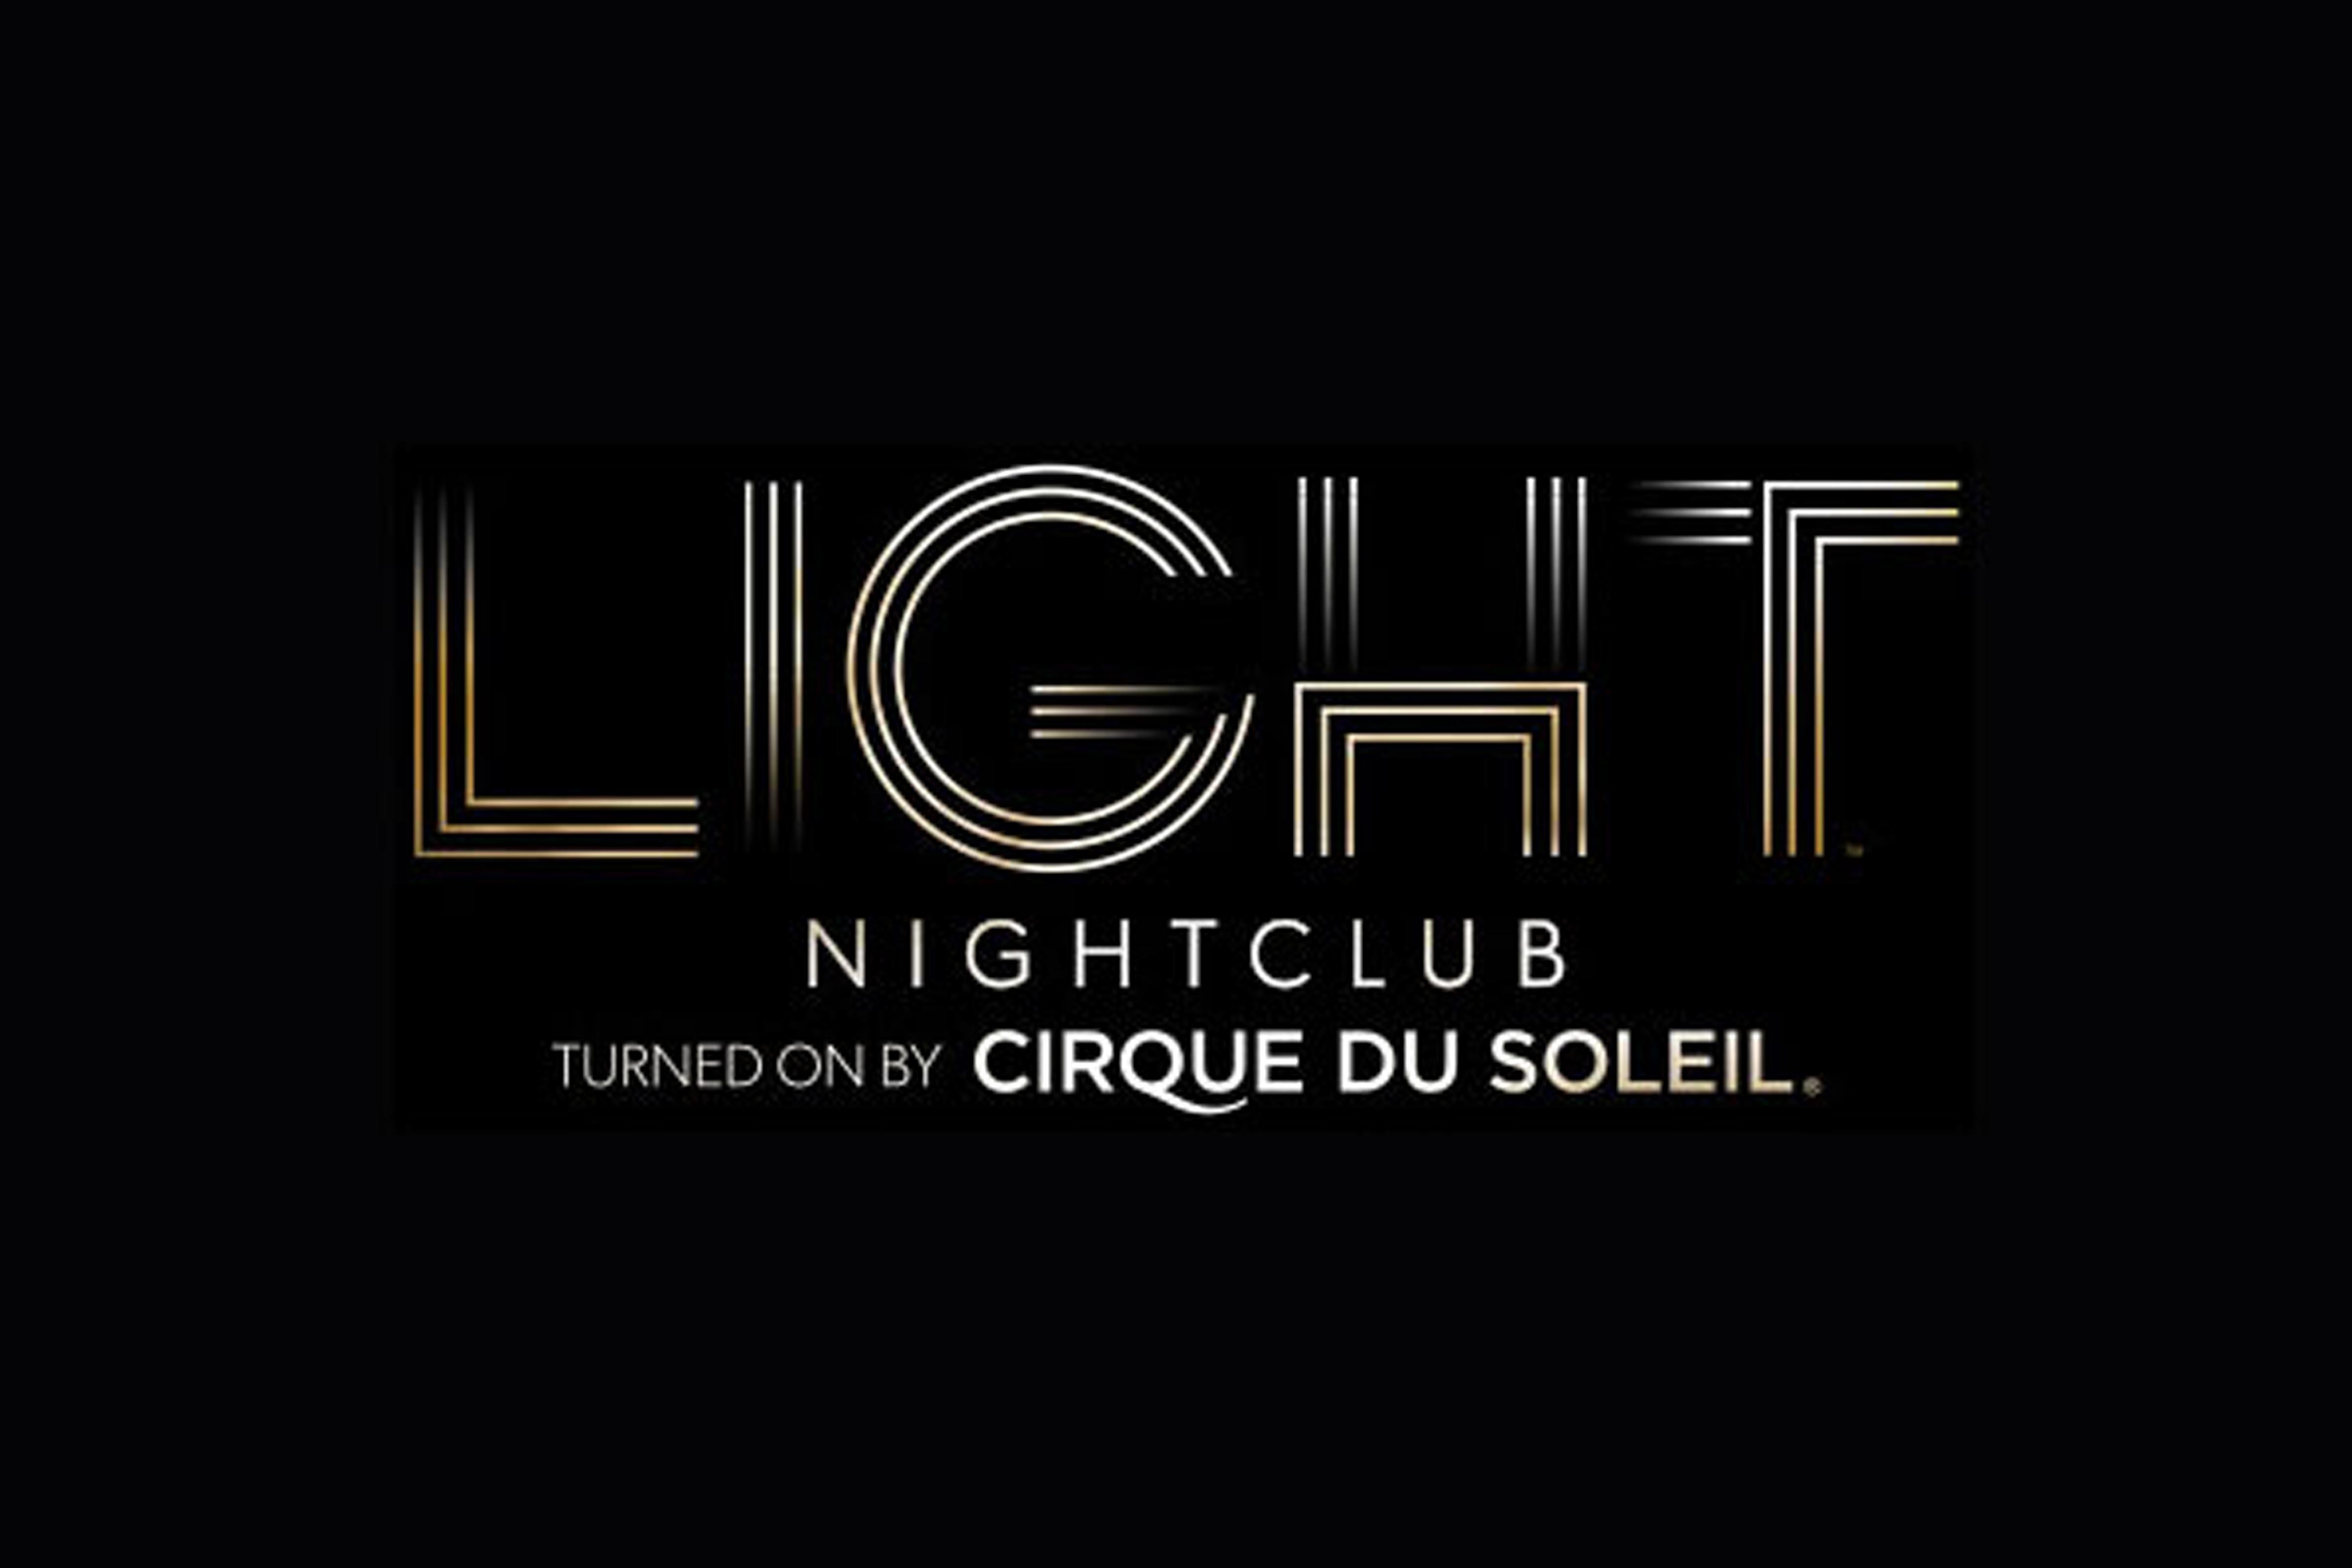 Google Light Logo - Light Nightclub - LA EPIC Club Crawls Las Vegas